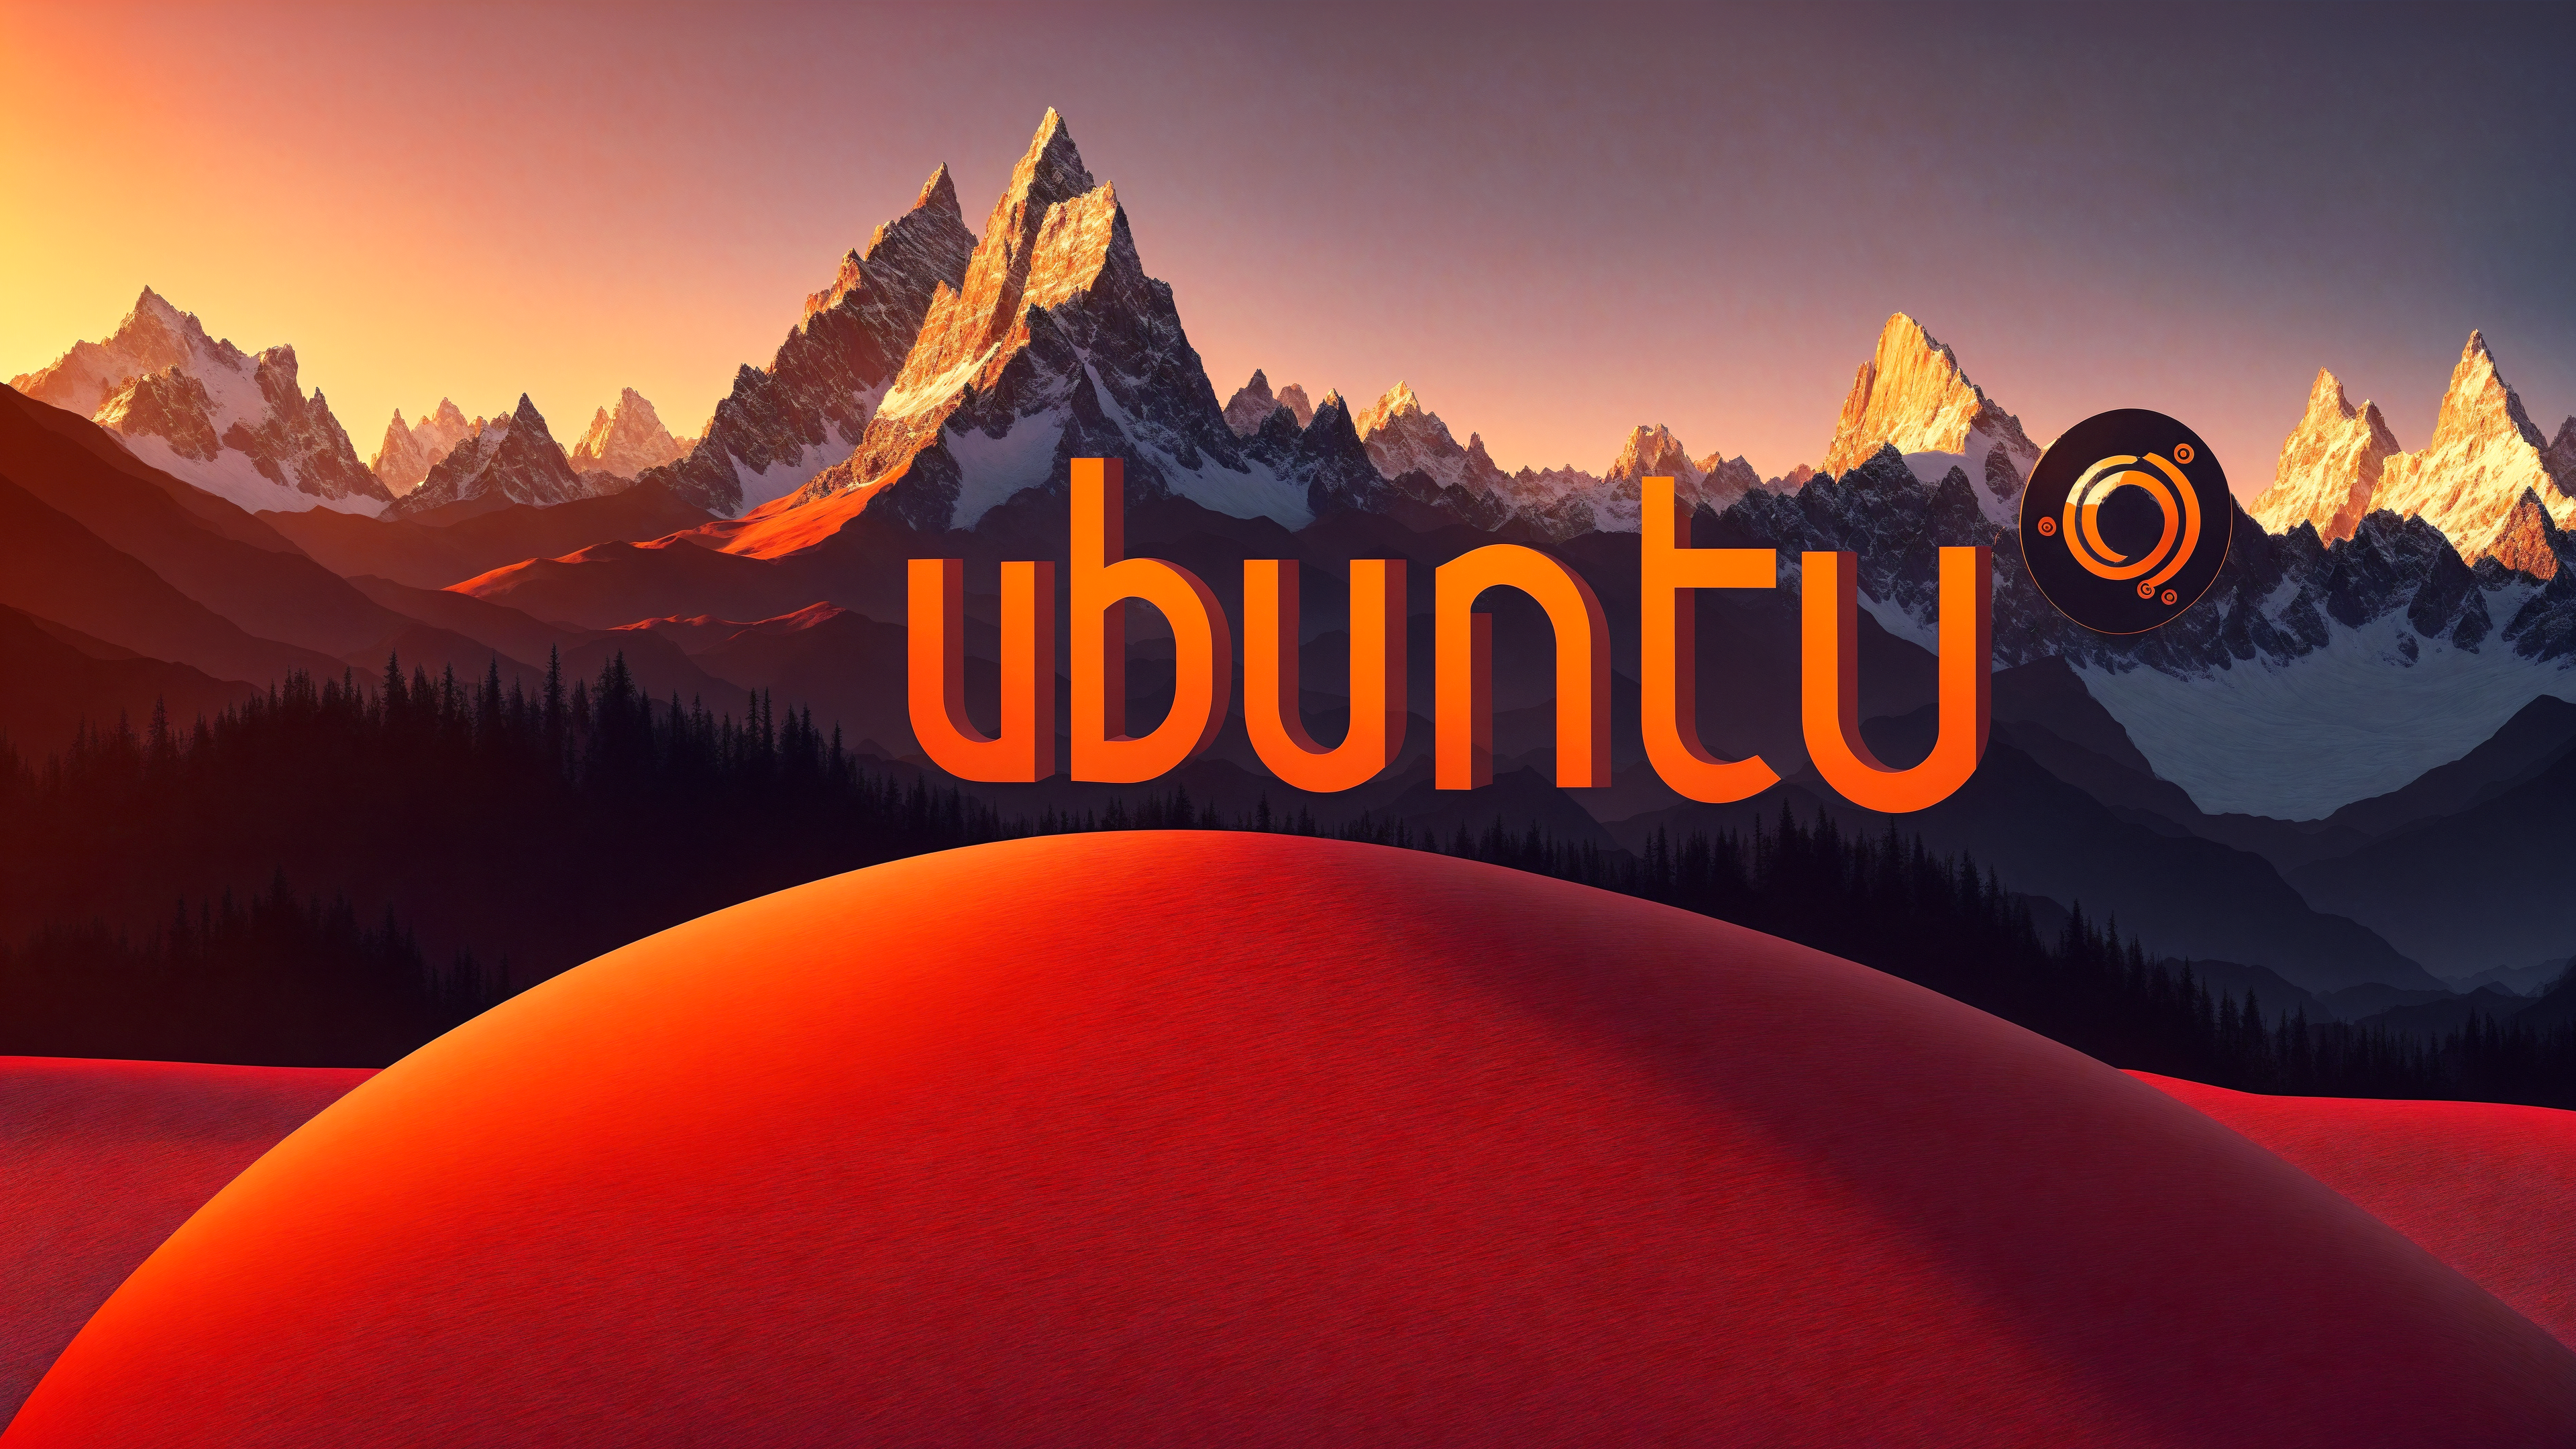 Ubuntu Ai Art Mountains Forest Red Orange Operating System Digital Art Text Sunset Glow Snow 3840x2160